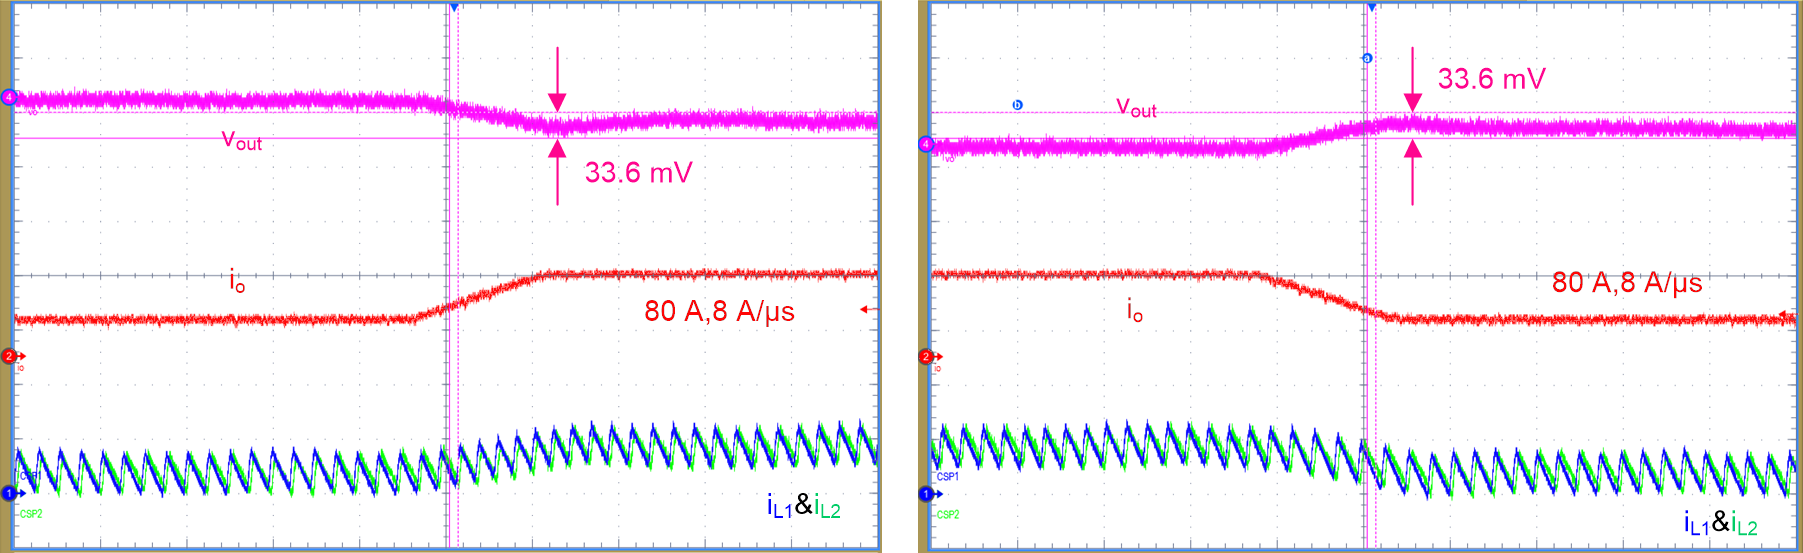 waveform-01-load-transient-waveforms-of-example-1-sluaa12.png